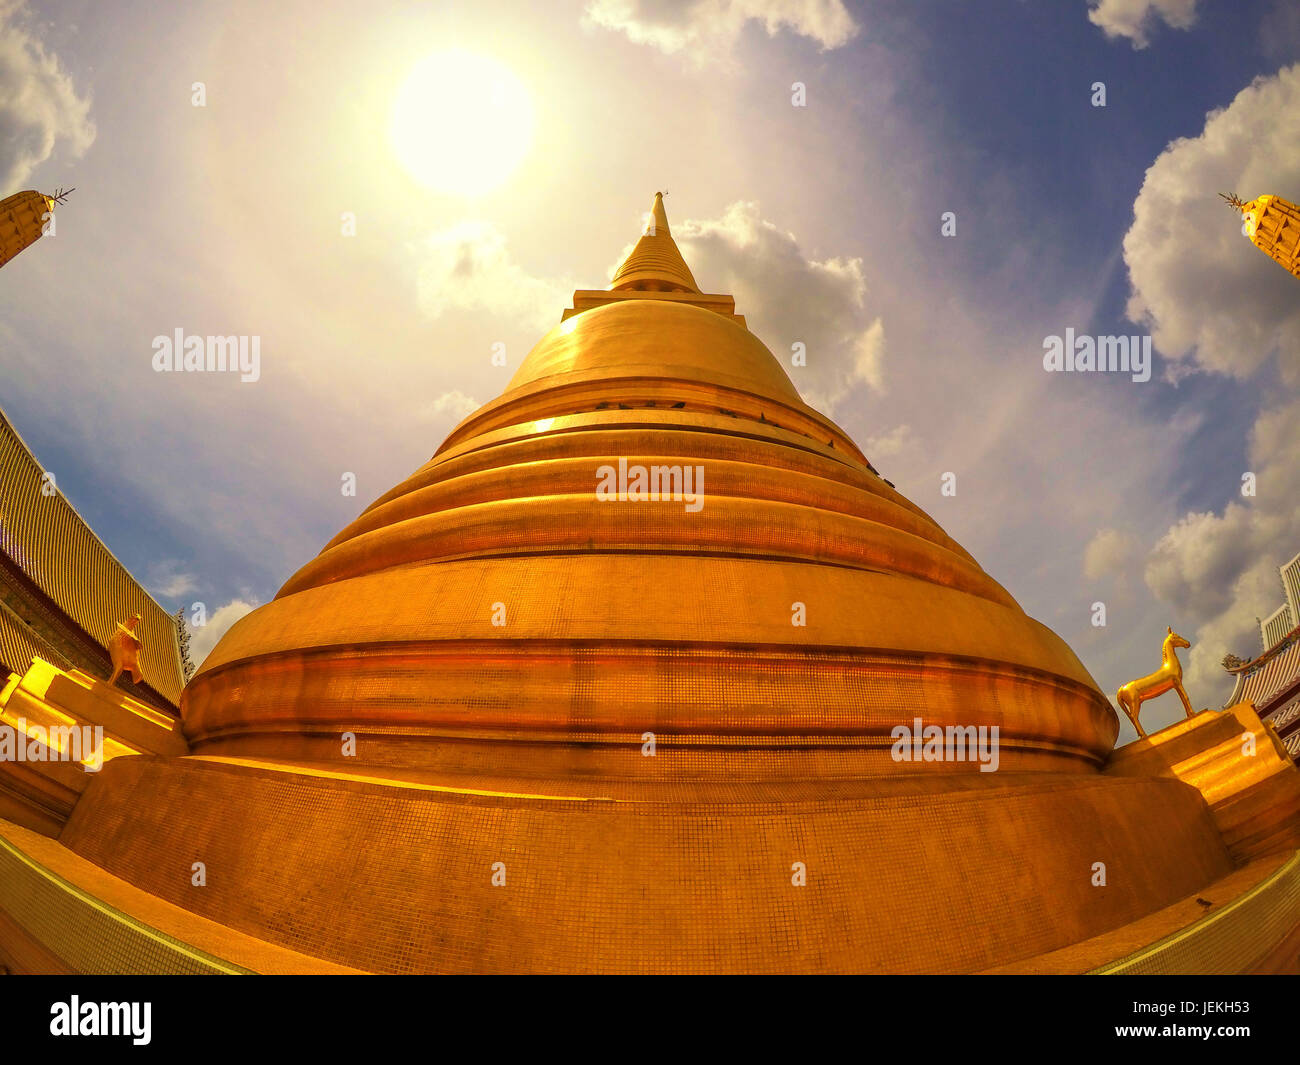 Golden dome of a temple, Phra Nakhon District, Thailand Stock Photo